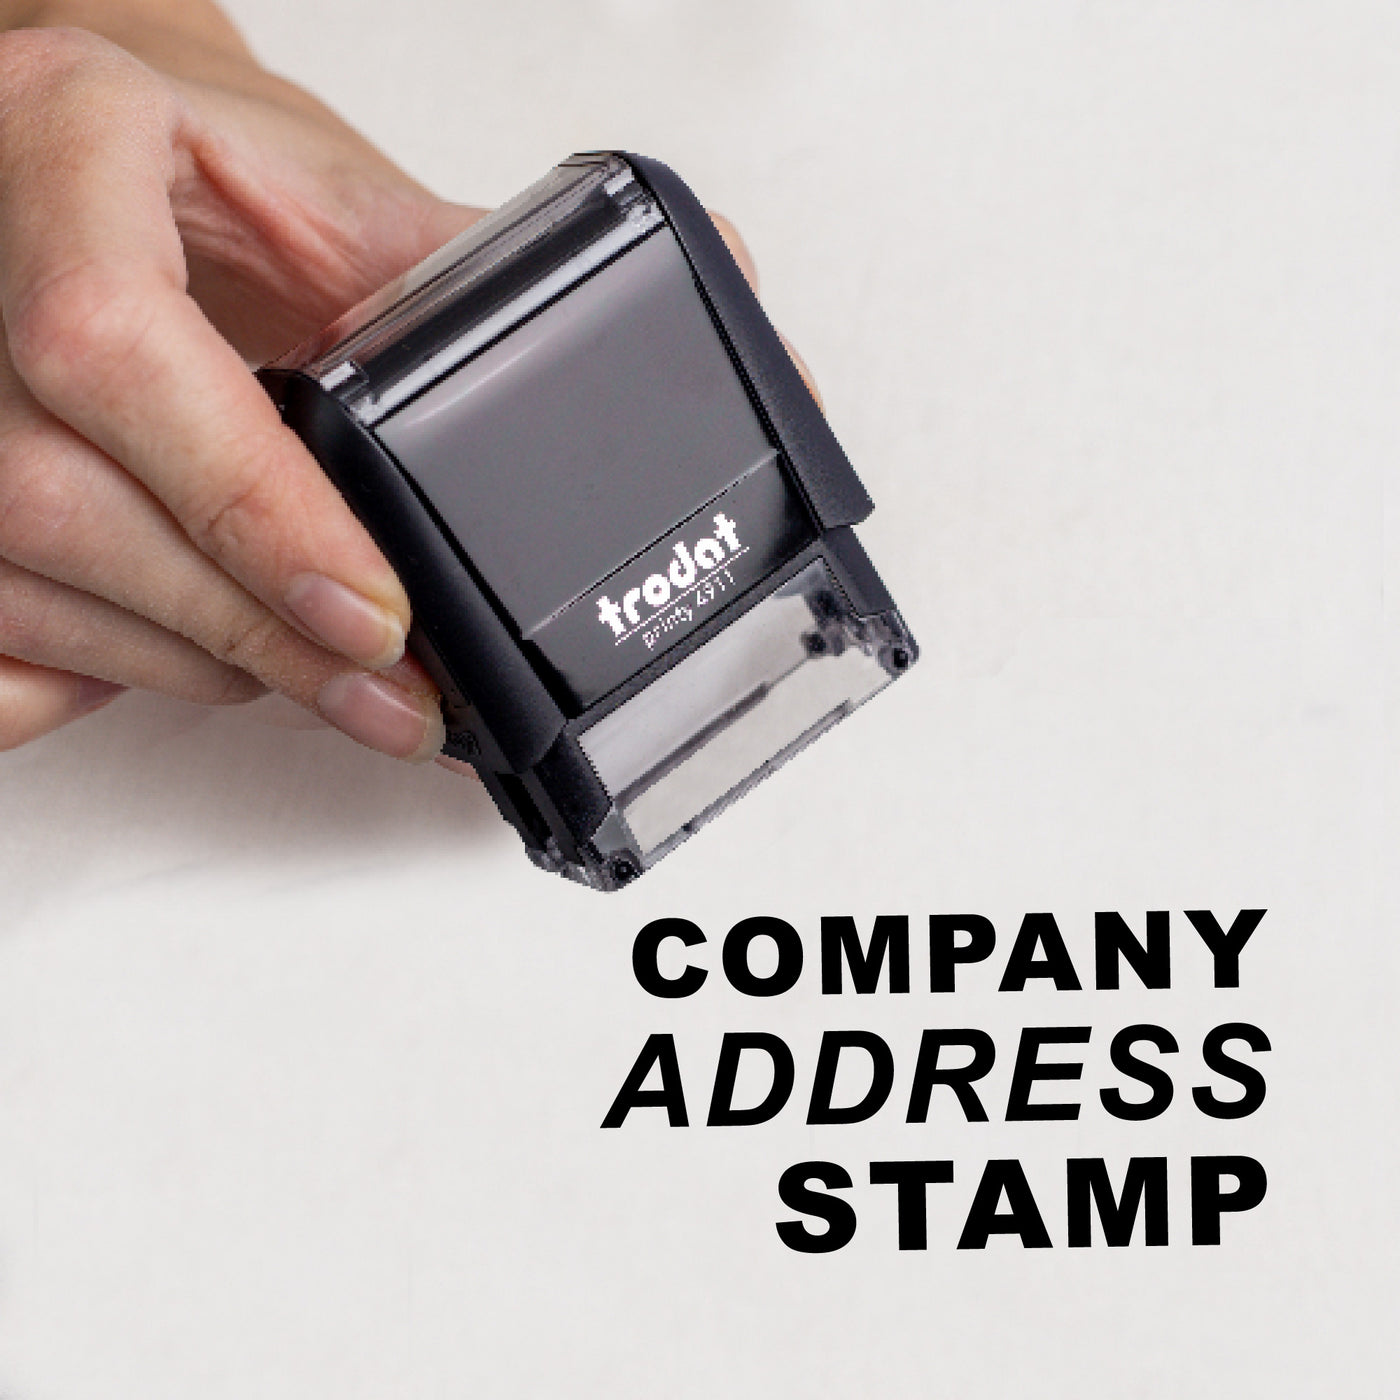 Business Address Self-inking Stamp | Heirloom Seals